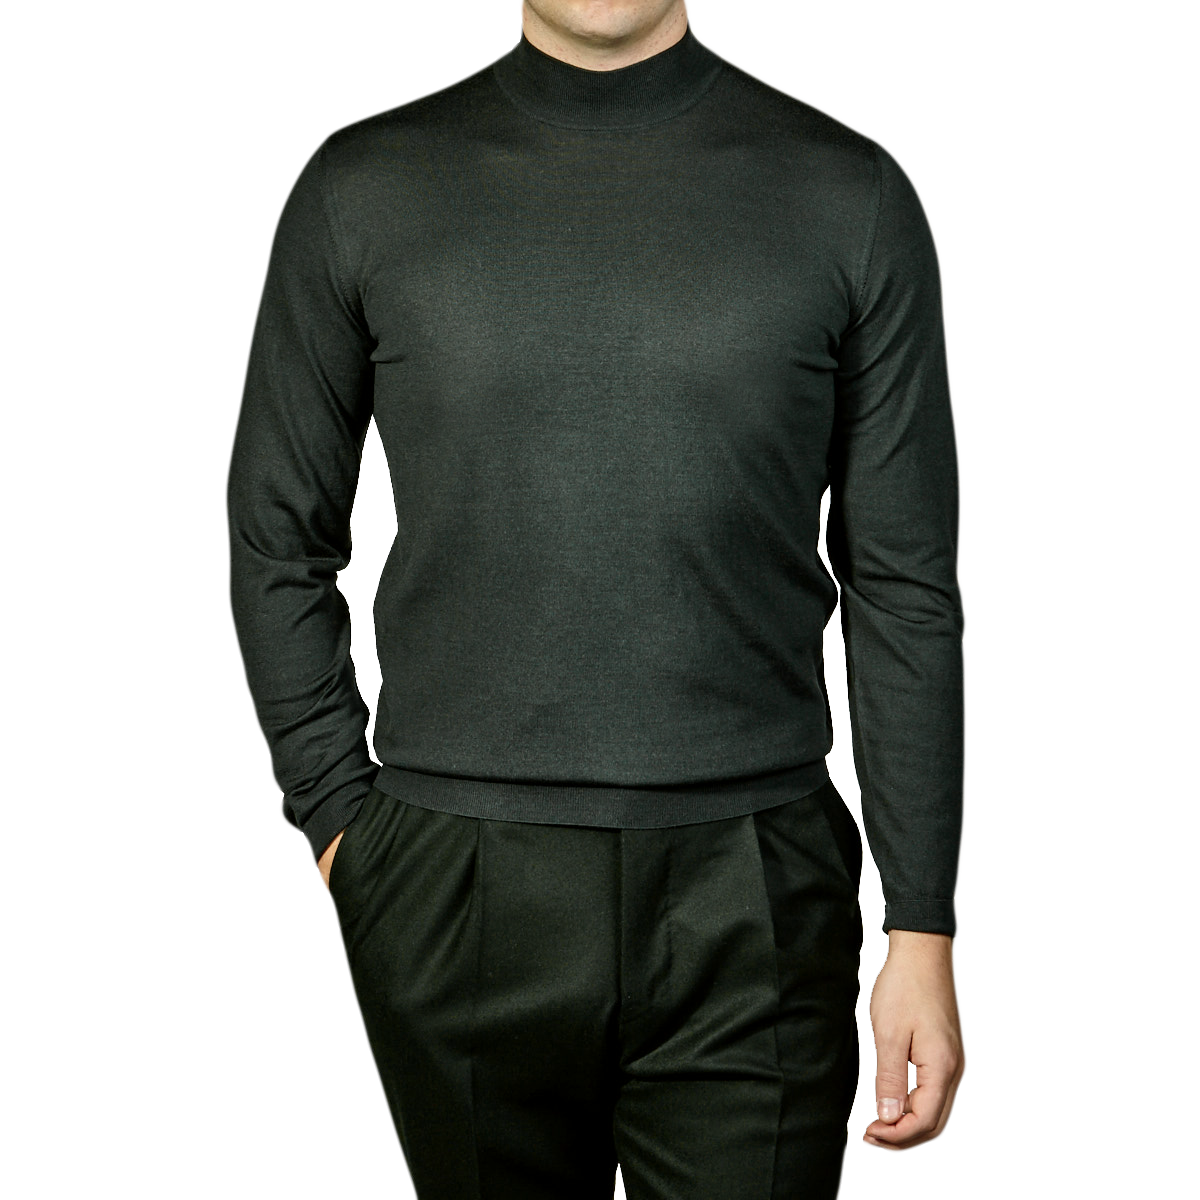 A man wearing a Green 140s Wool Mockneck Sweater made by Fedeli.